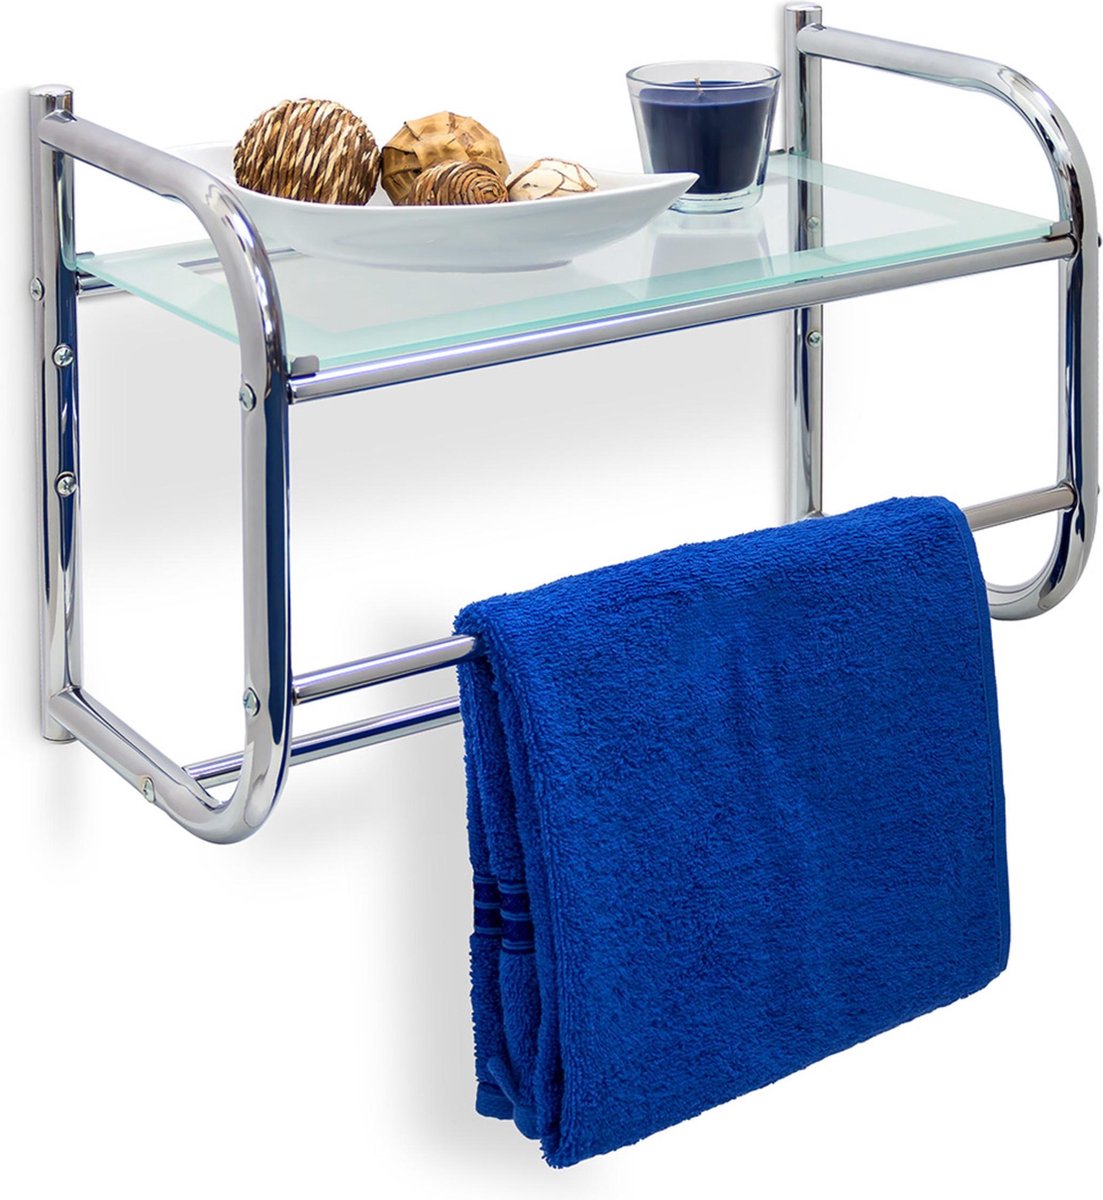 Relaxdays handdoekhouder met plateau uit glas, handdoekrek, plankje, 2 stangen